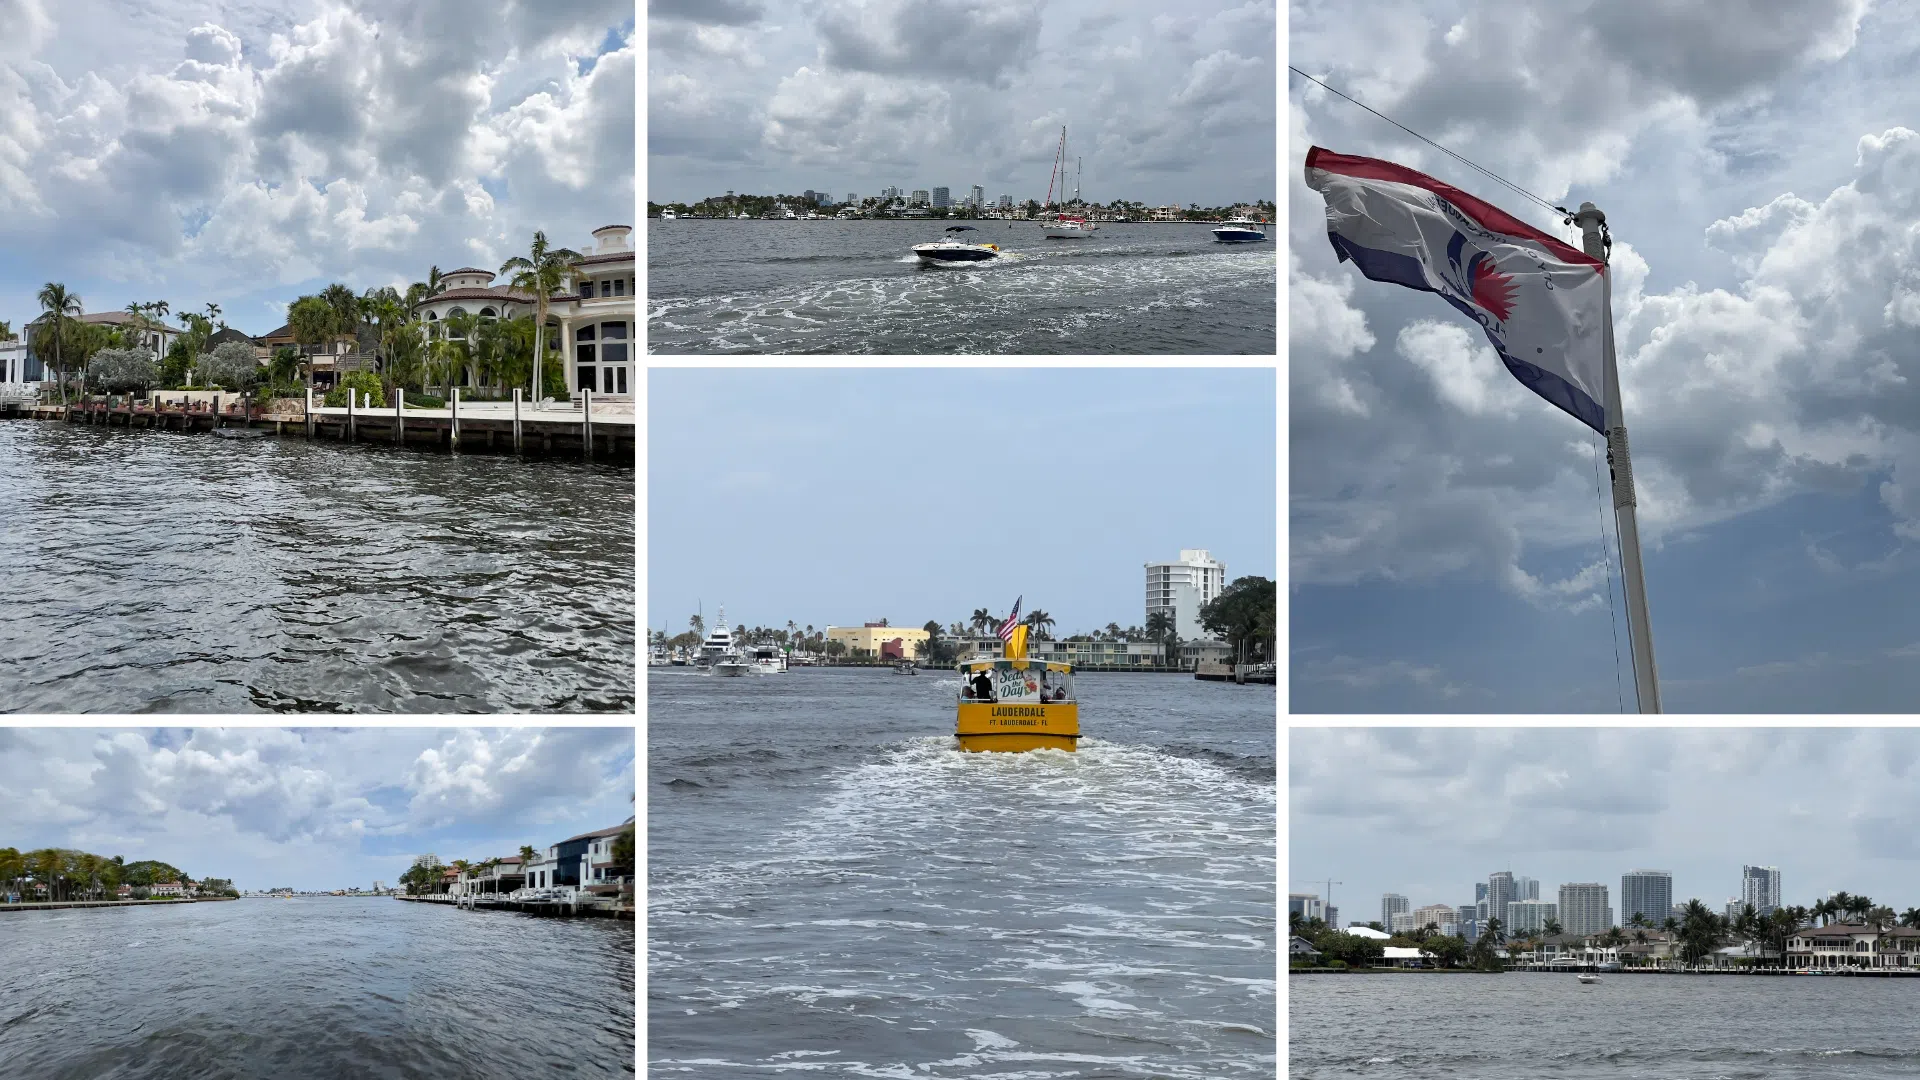 Cruising the Venice of America in Fort Lauderdale Florida